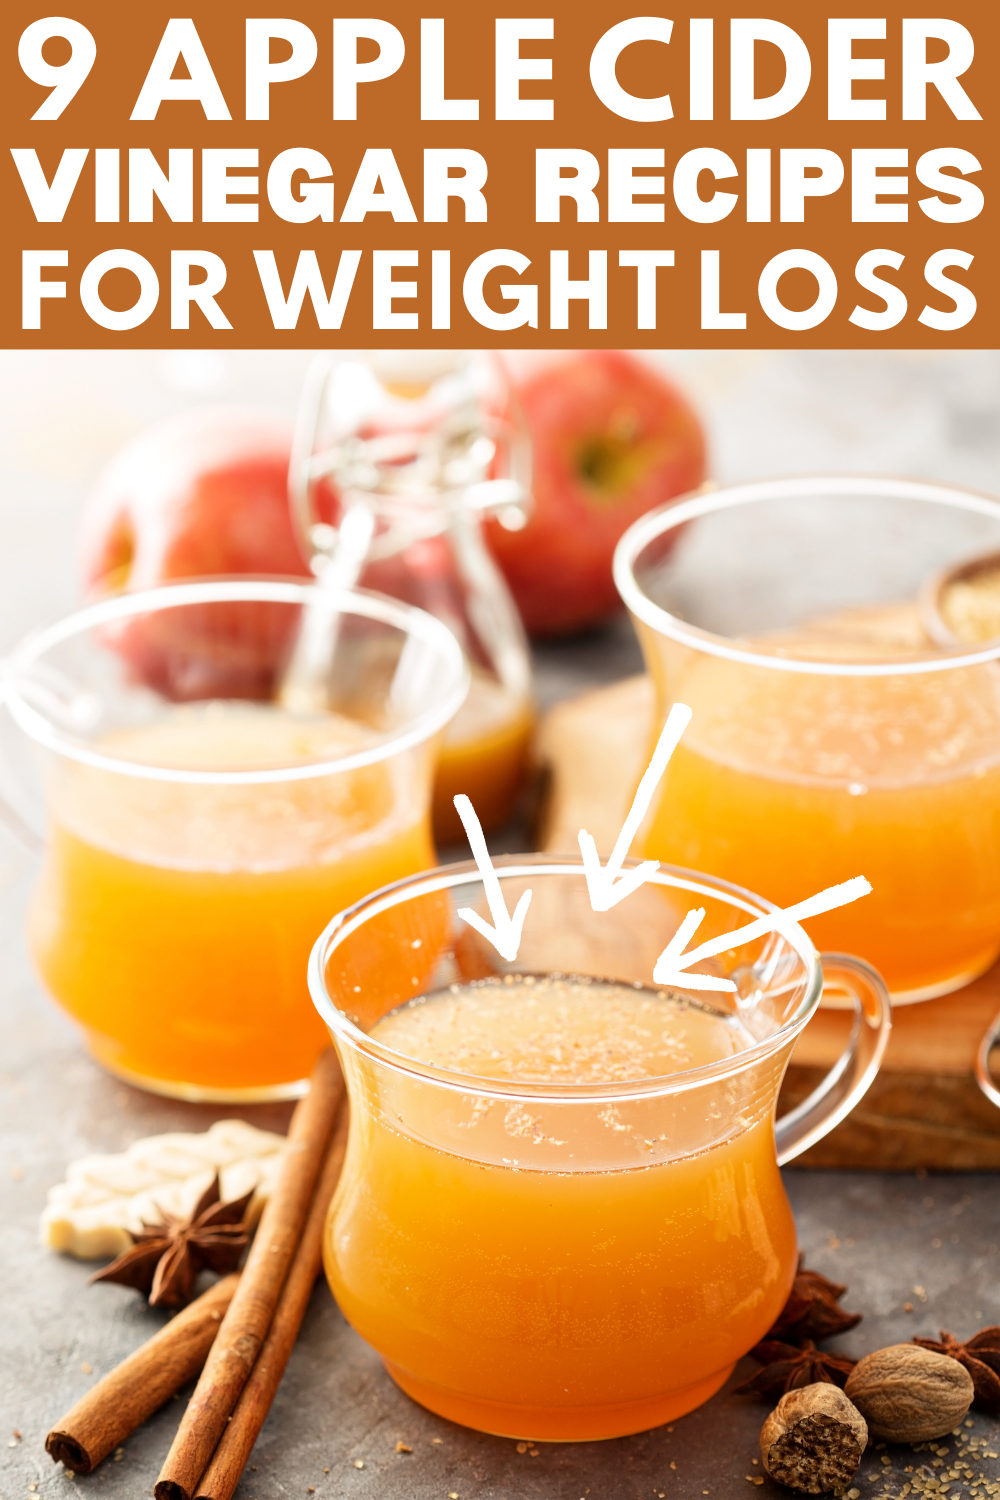 9 Apple Cider Vinegar Recipes For Weight Loss